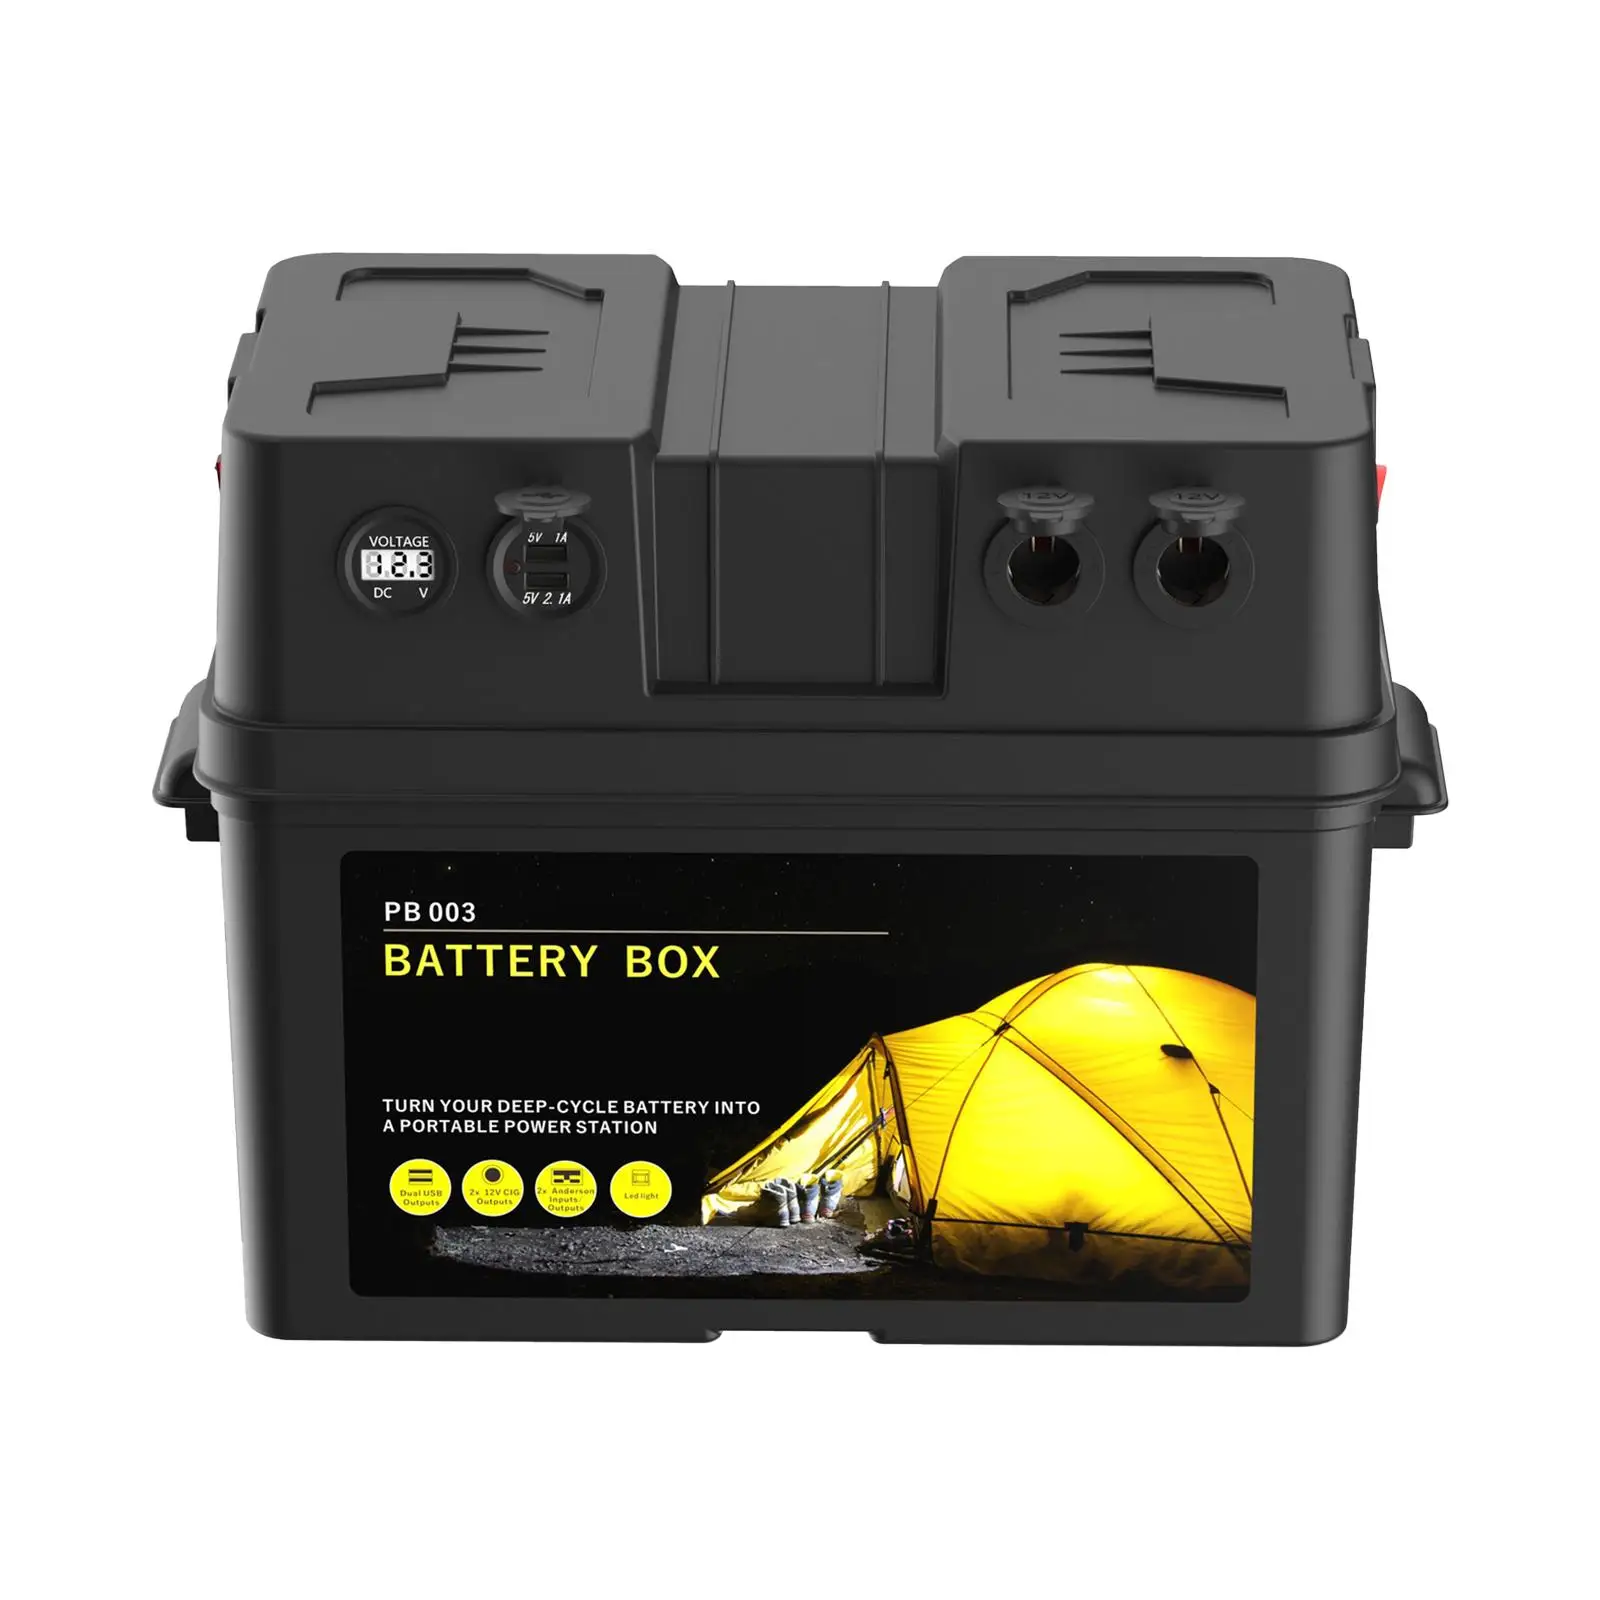 Trolling Motor Battery Box Dual USB Ports 12V Multifunction Smart Marine Battery Box for Marine Outdoor Travel ATV Camping